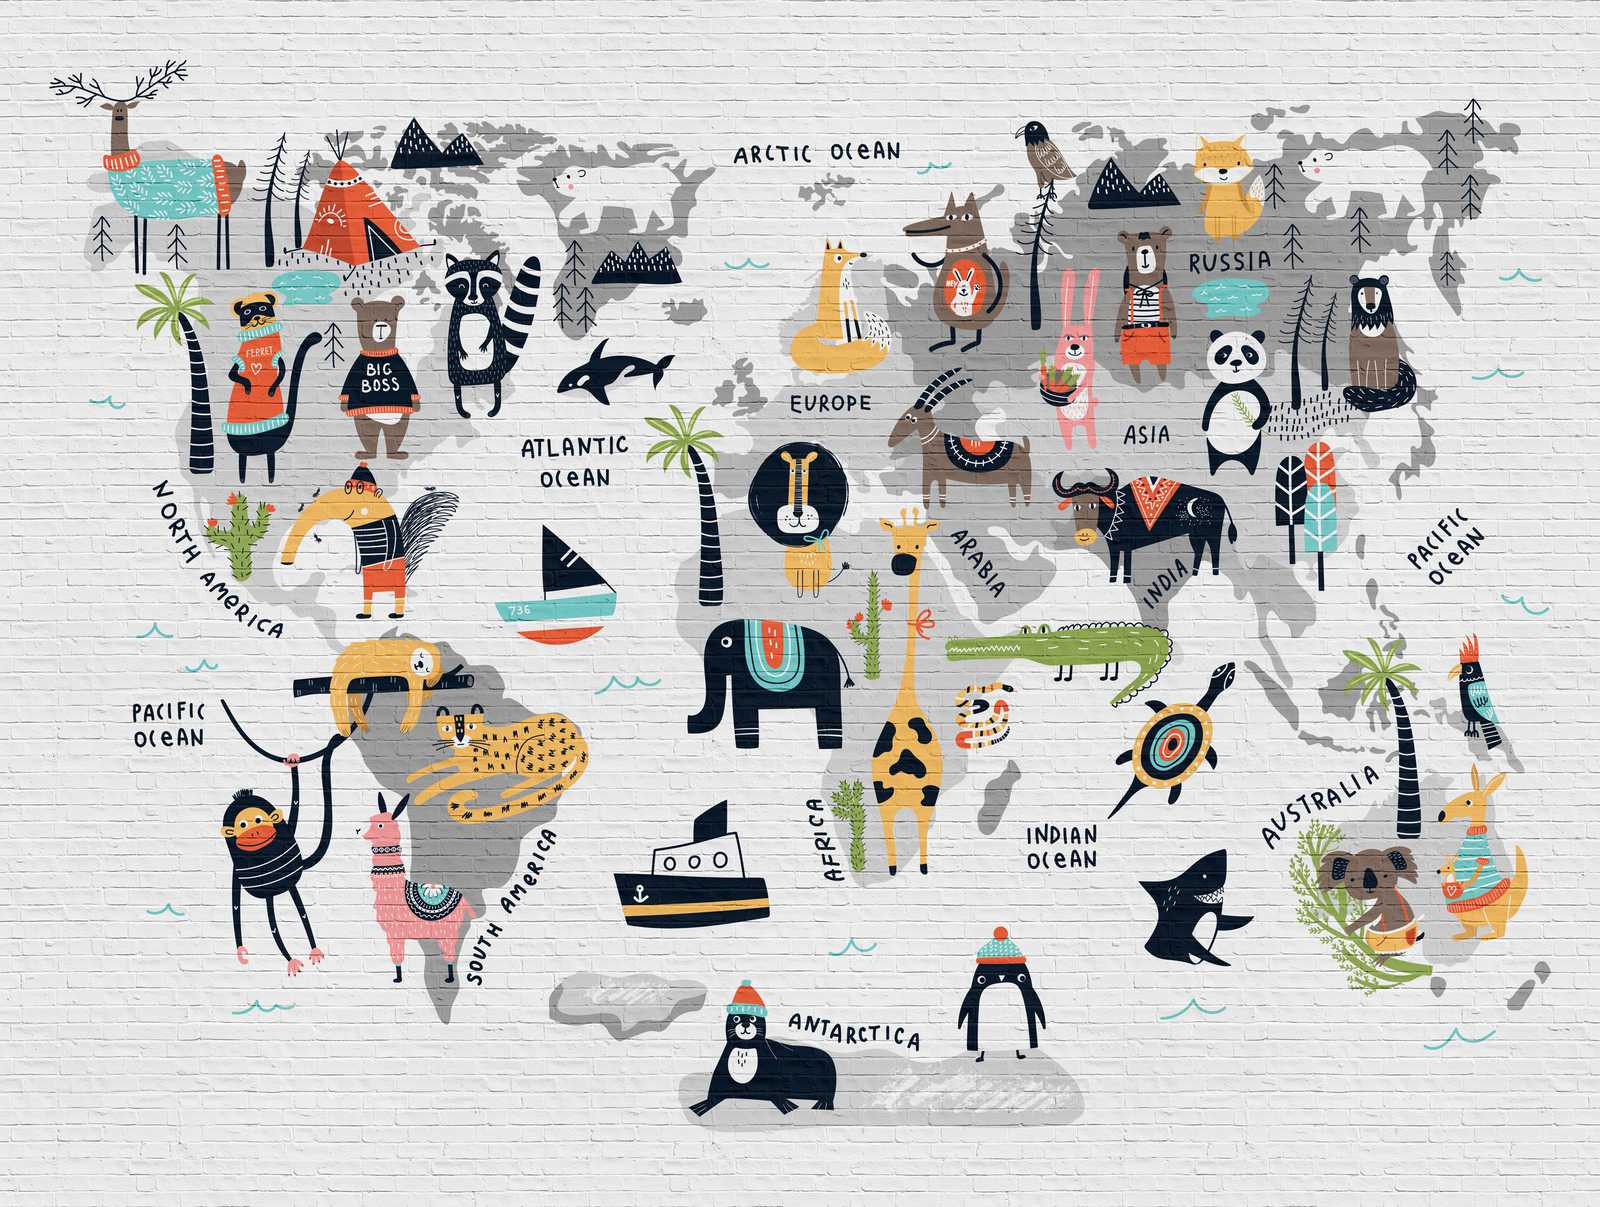             Wallpaper novelty | Nursery wallpaper world map with animal motifs
        